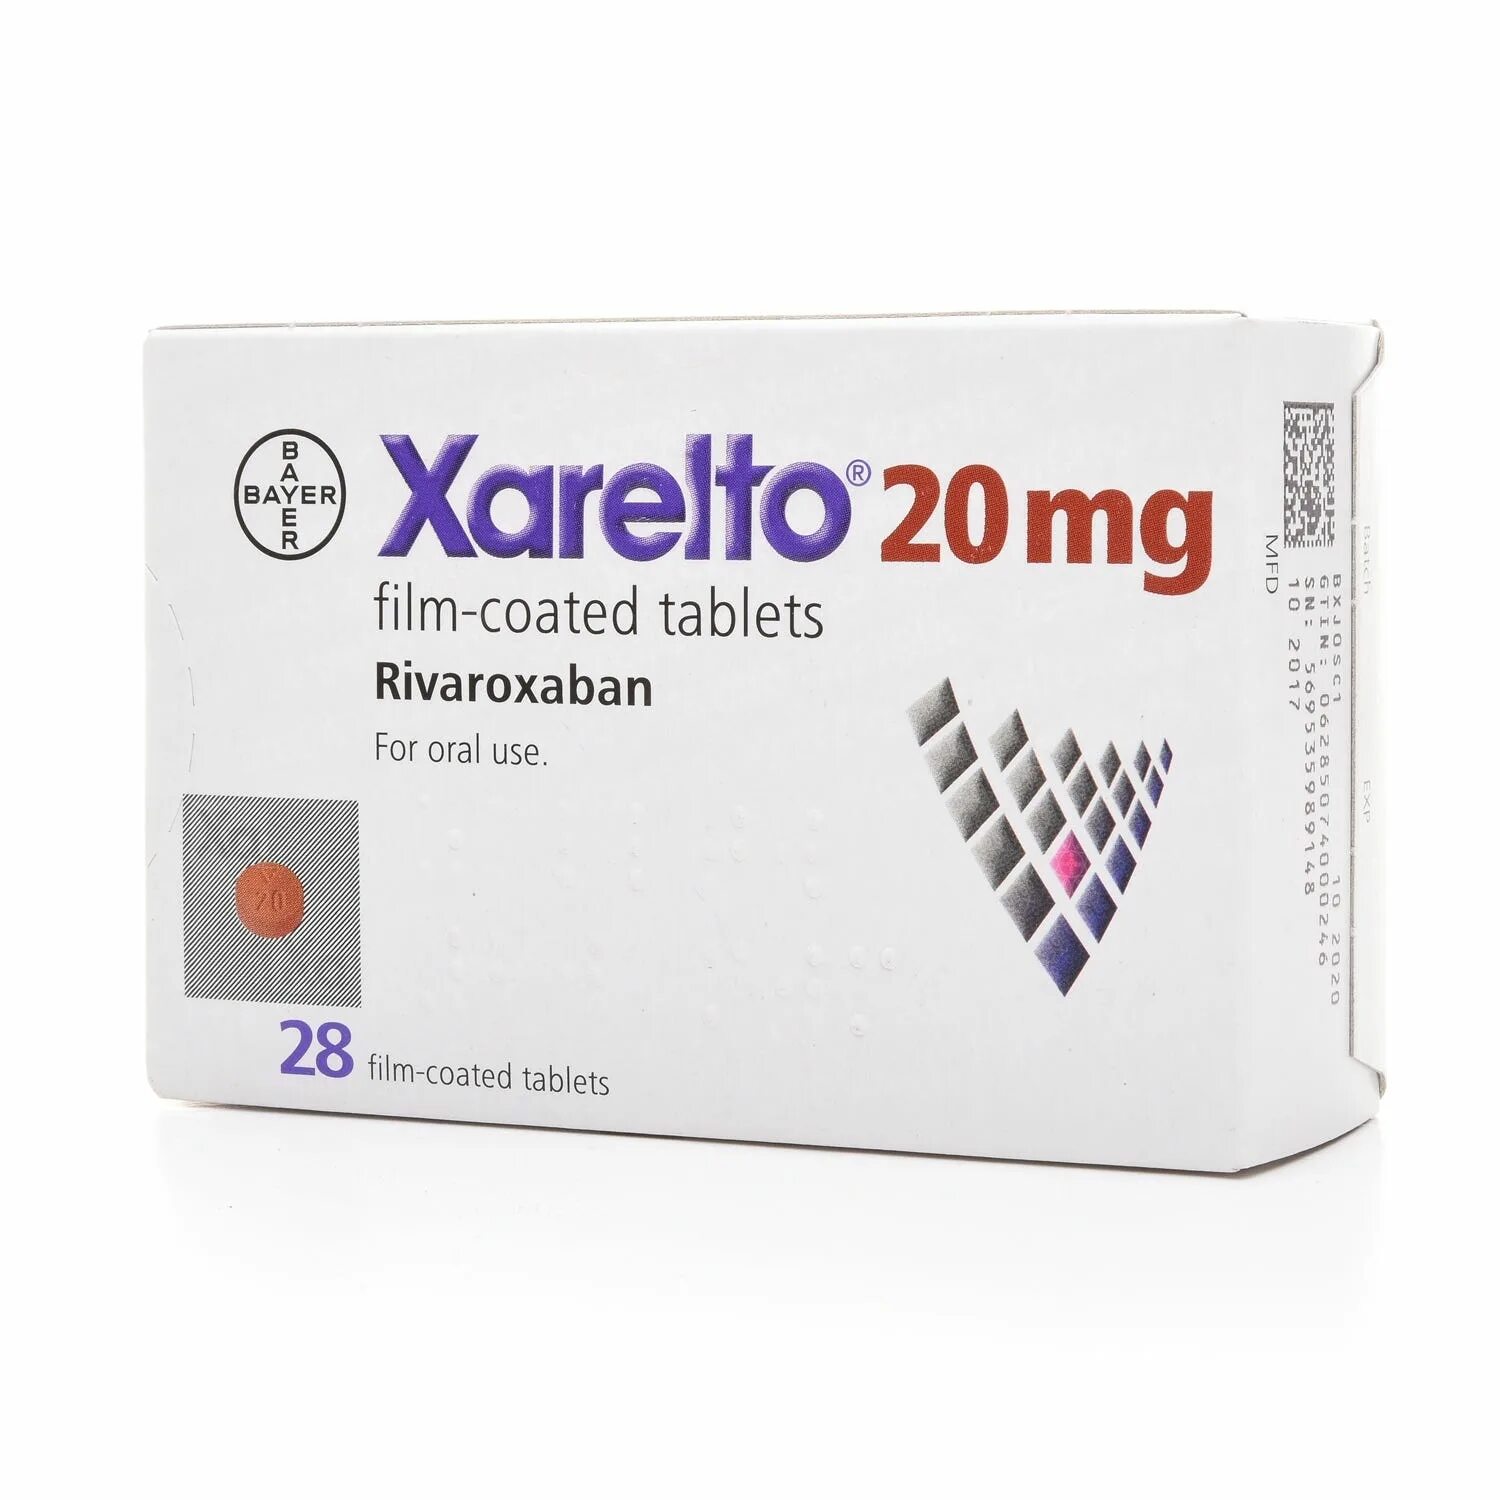 Ксарелто ривароксабан 20мг. Rivaroxaban Tablets Xarelto 20 MG. Ривароксабан 2.5 мг. Ксарелто 20 мг турецкий.